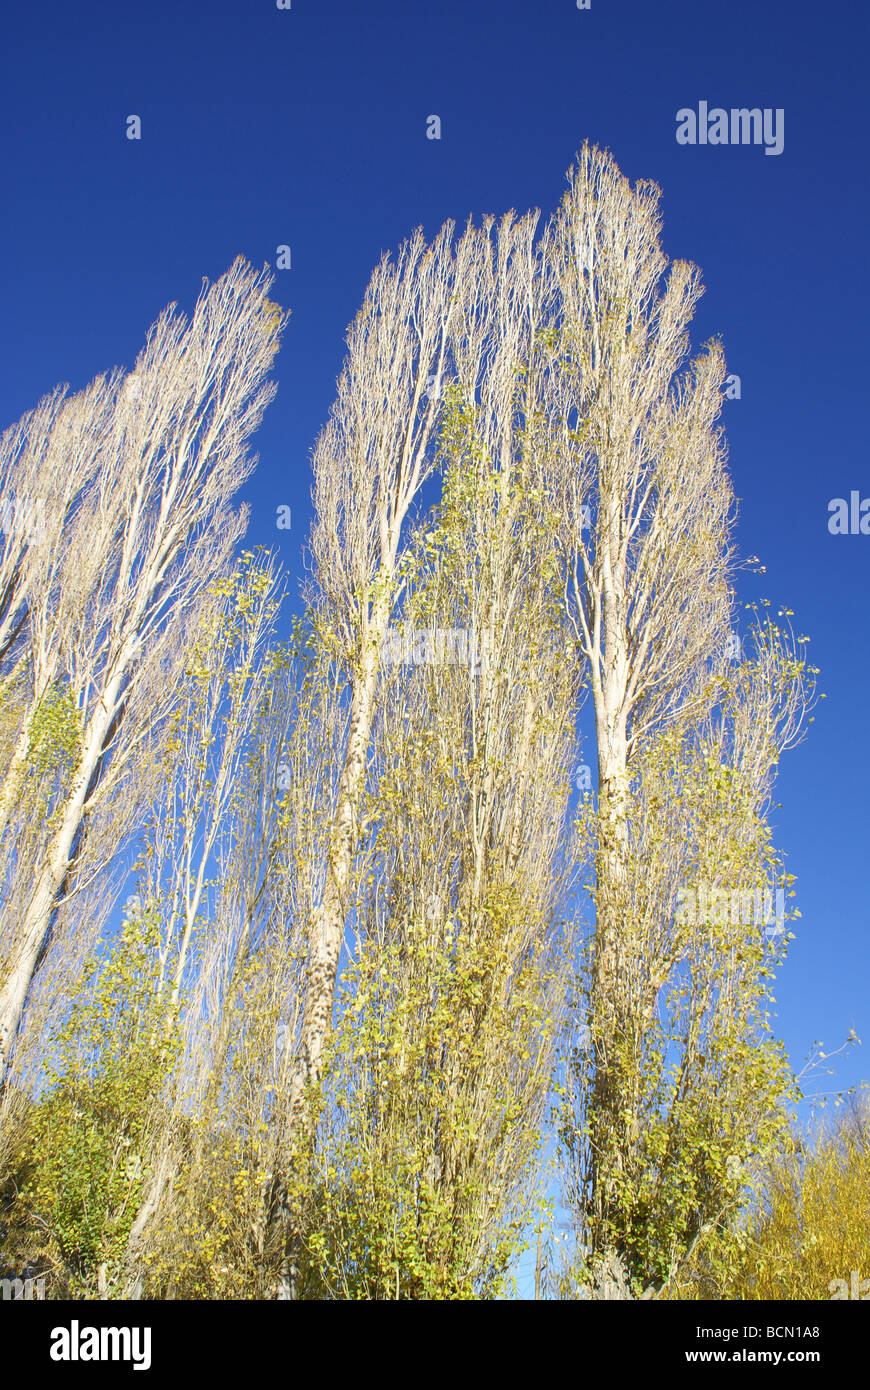 Bianco di alti alberi di pioppo tendere verso il cielo, Tashkurgan tagiko contea autonoma, Kashgar Prefettura, Xinjiang autonoma Uigura Foto Stock